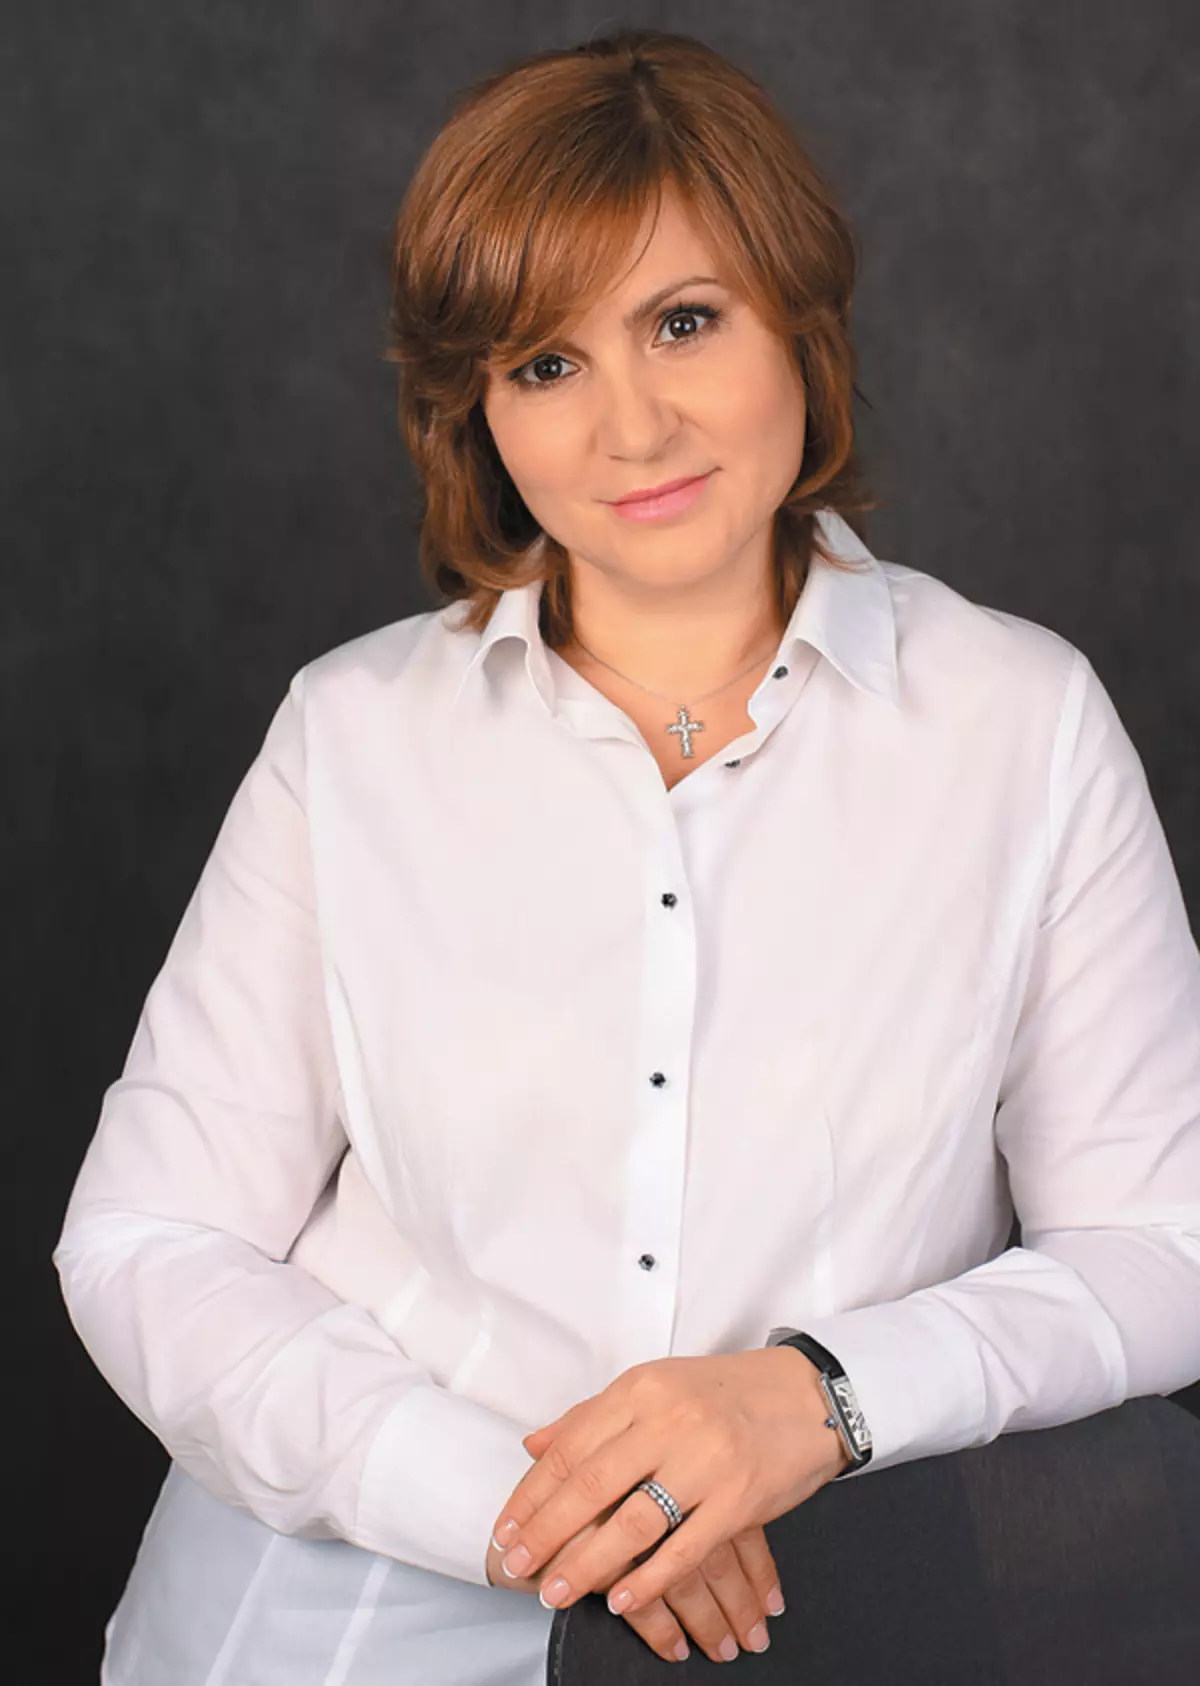 Elena Vasilyeva